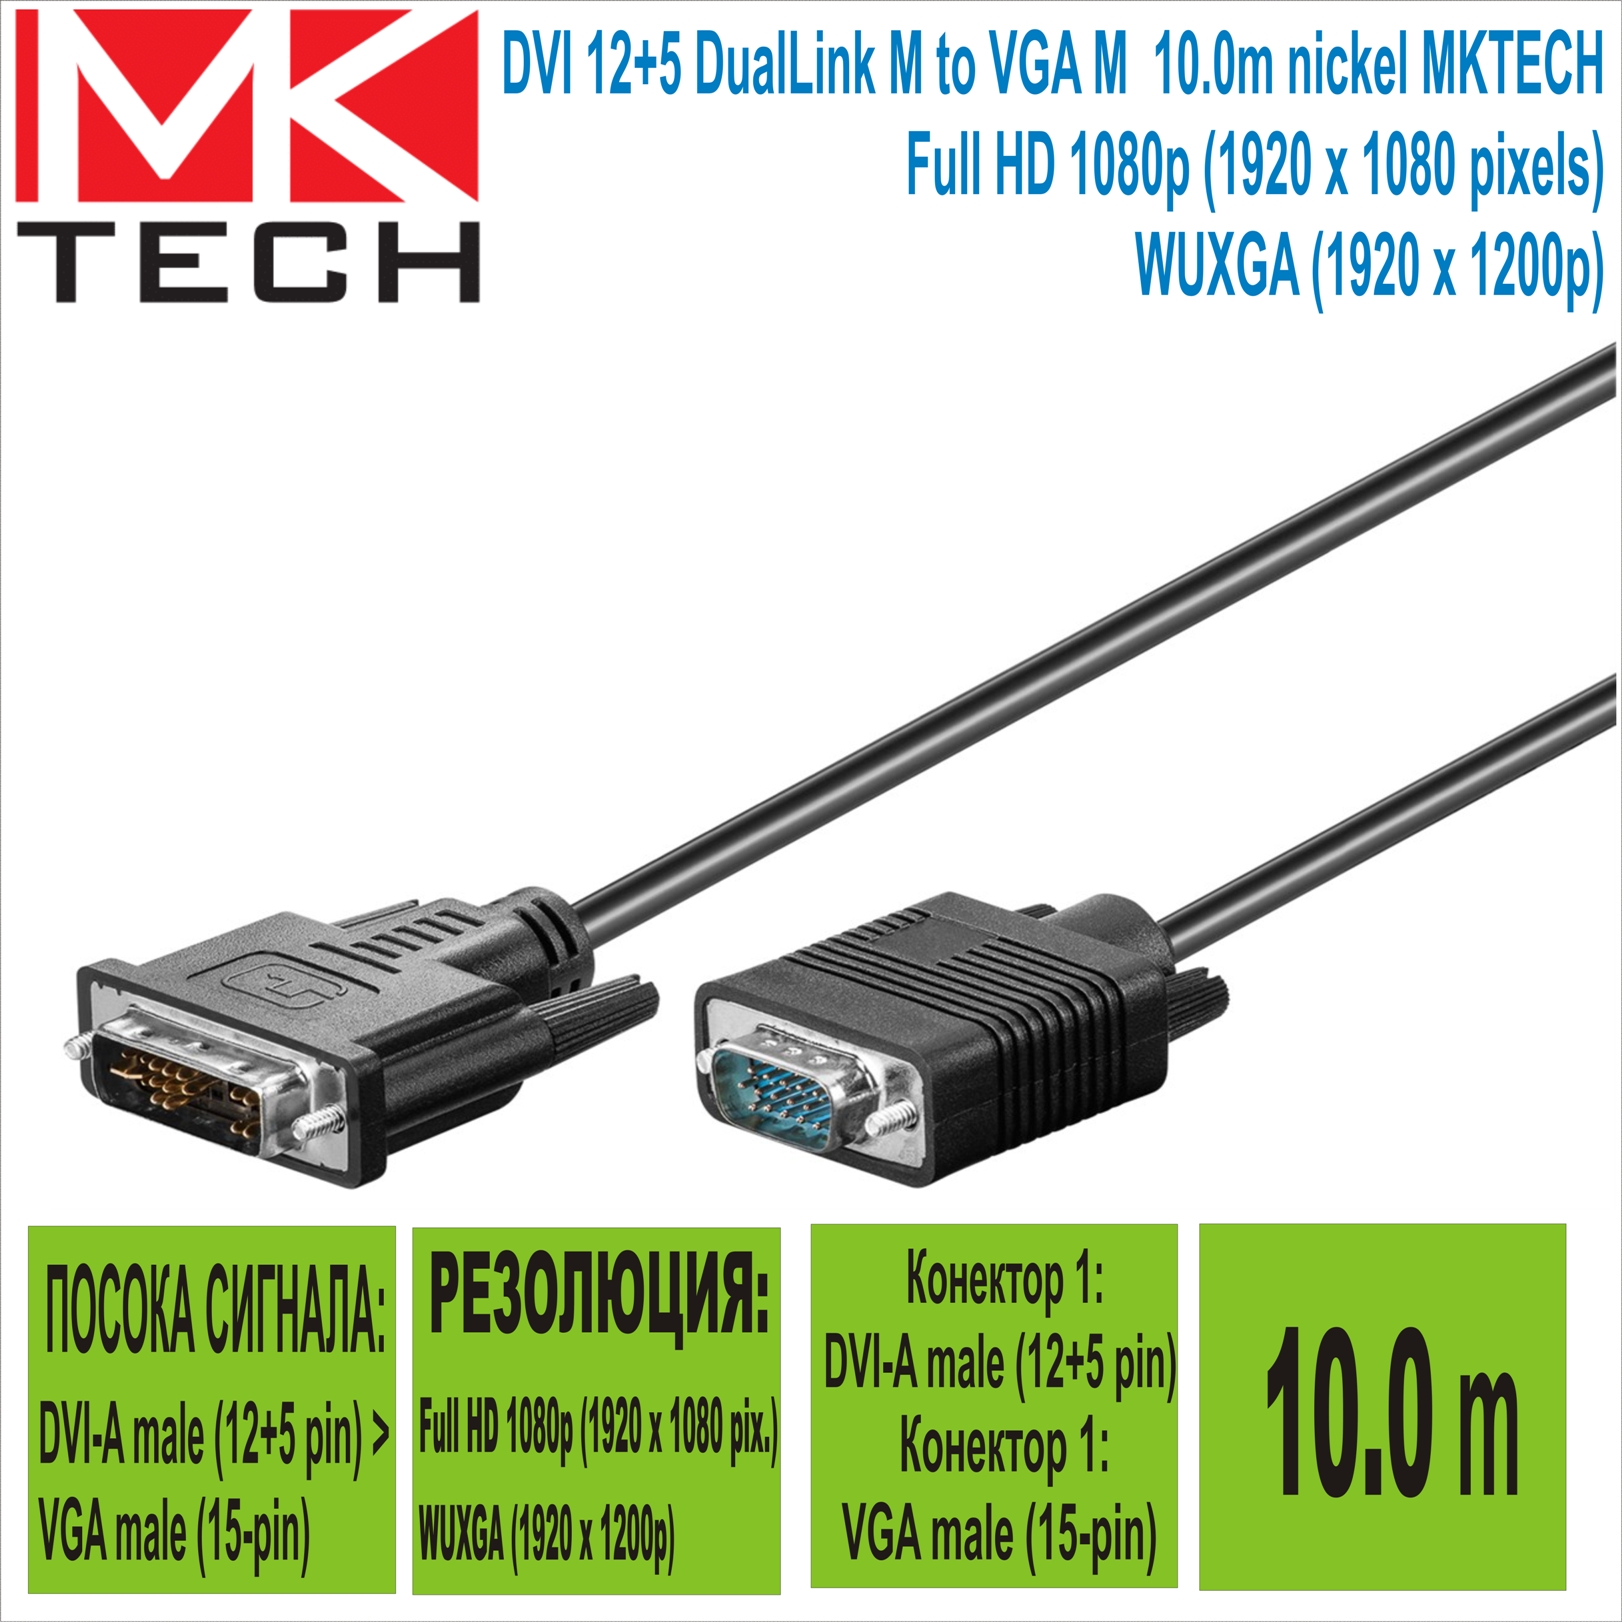 DVI 12+5 DualLink M to VGA M 10.0m nickel MKTECH